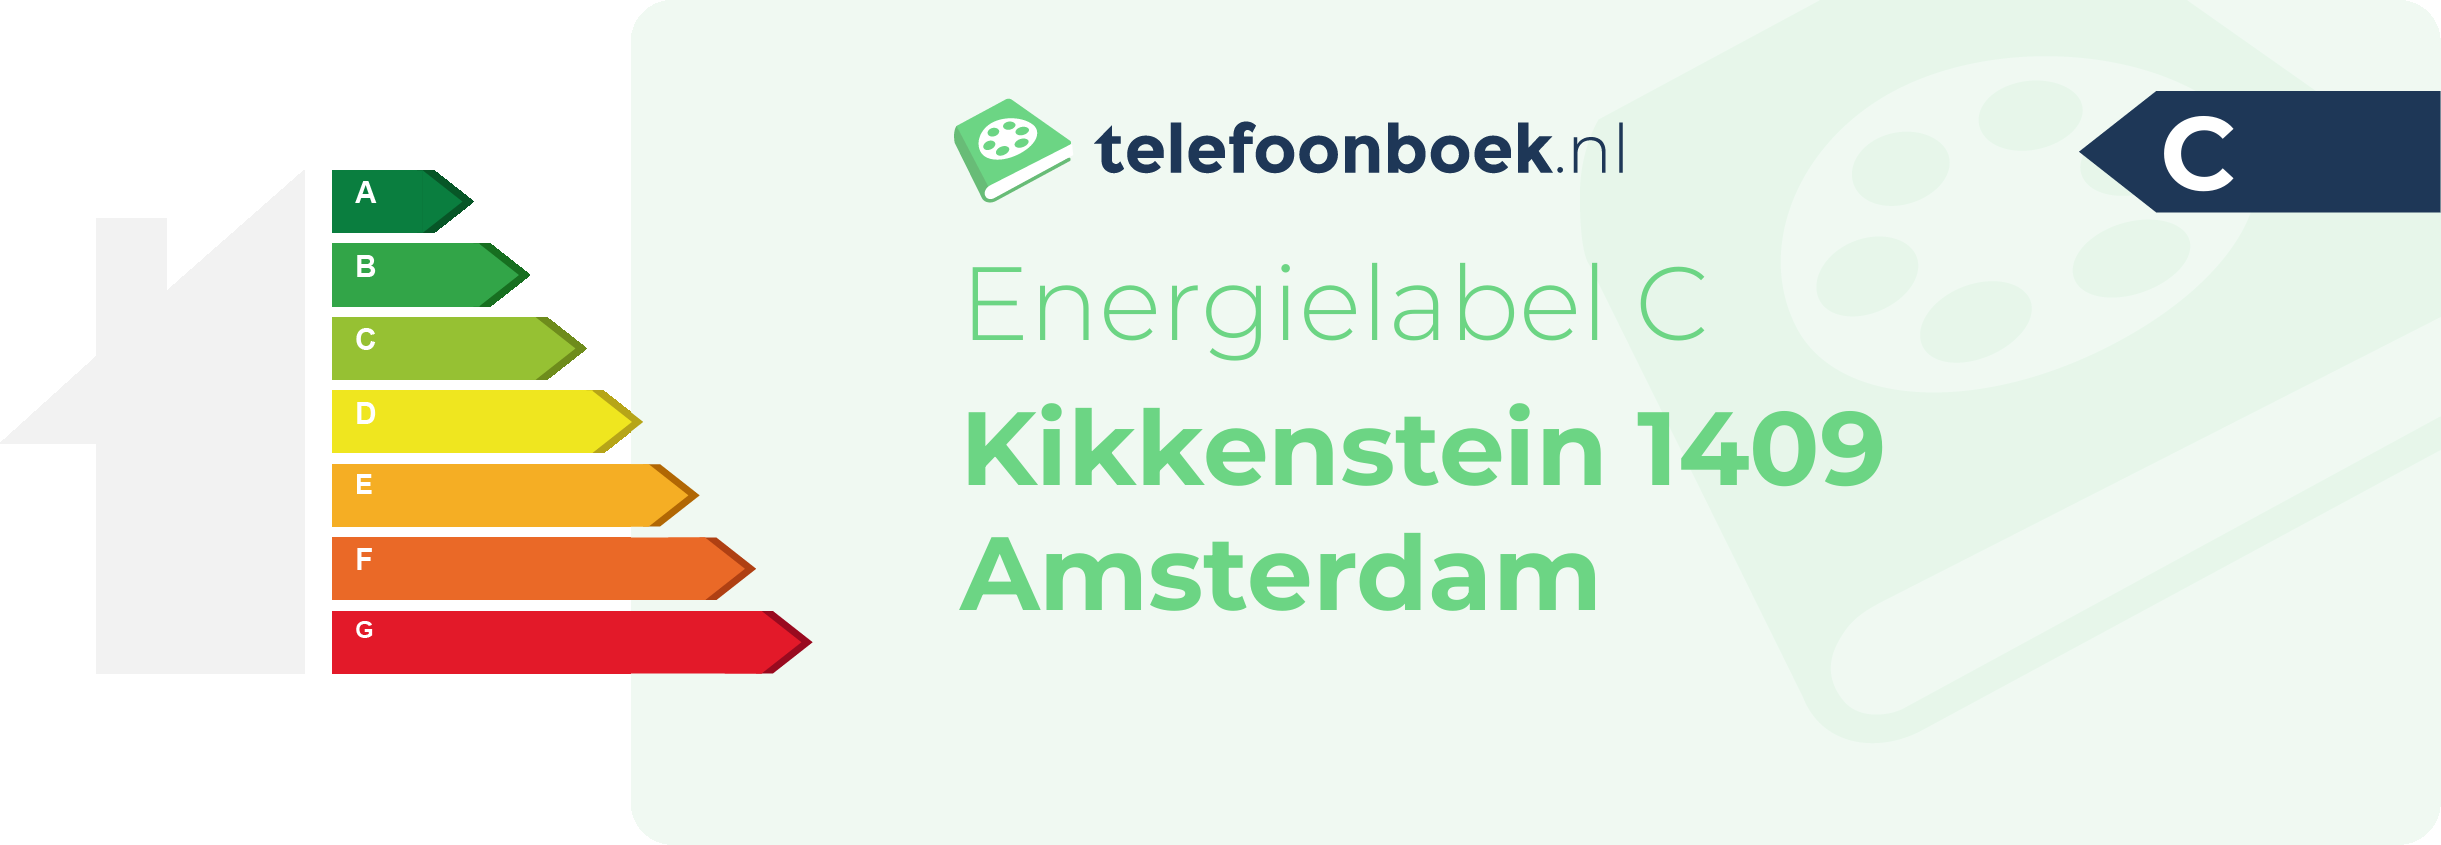 Energielabel Kikkenstein 1409 Amsterdam